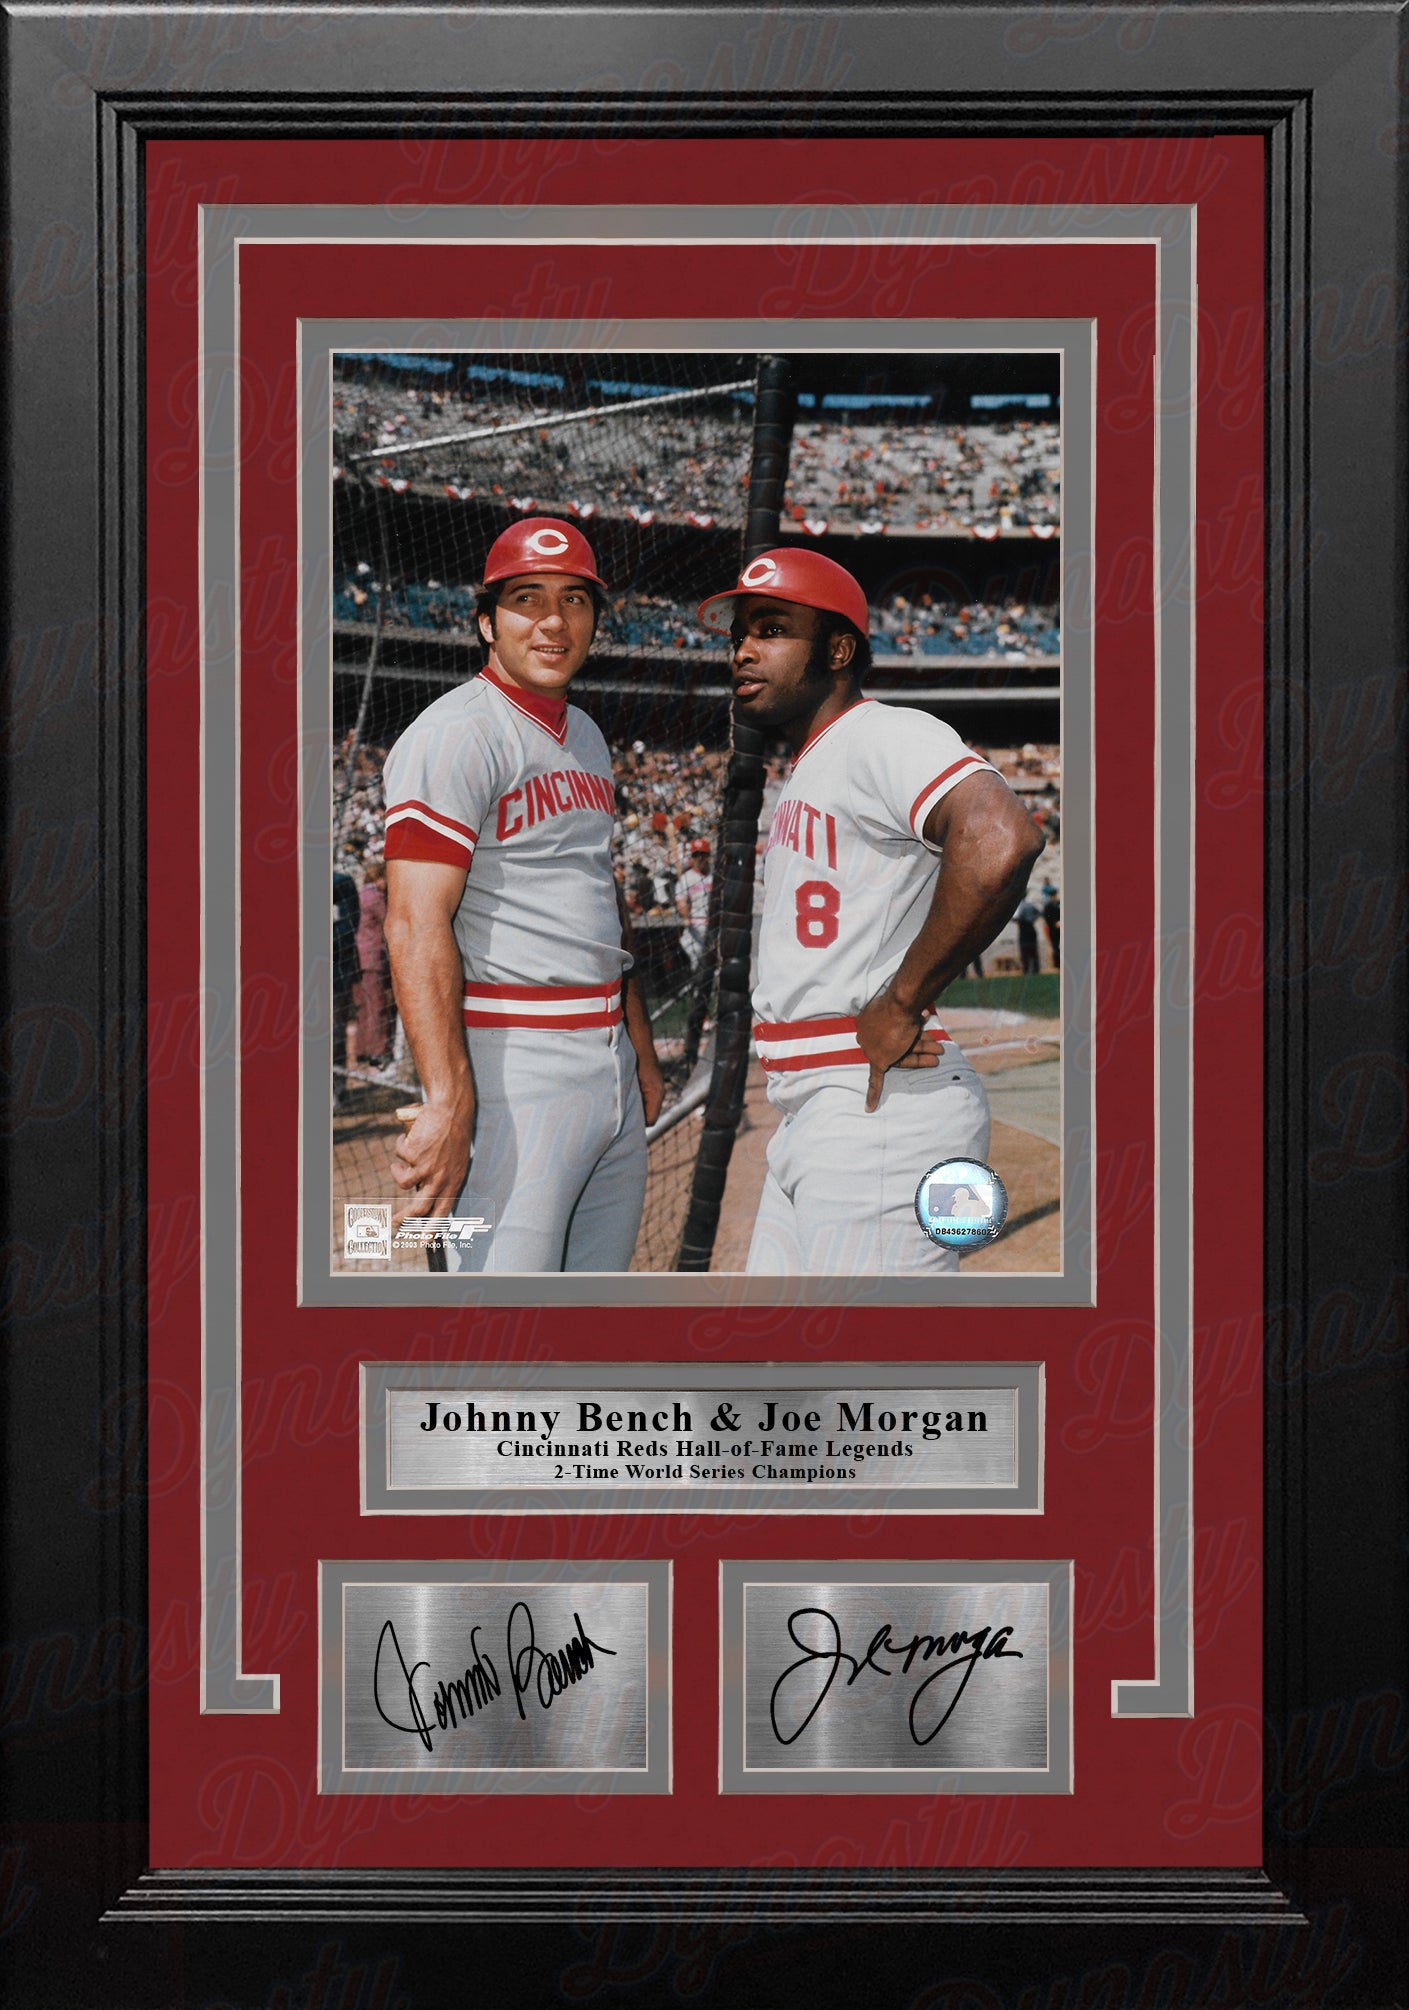 Johnny Bench & Joe Morgan Cincinnati Reds 8" x 10" Framed Baseball Photo with Engraved Autographs - Dynasty Sports & Framing 